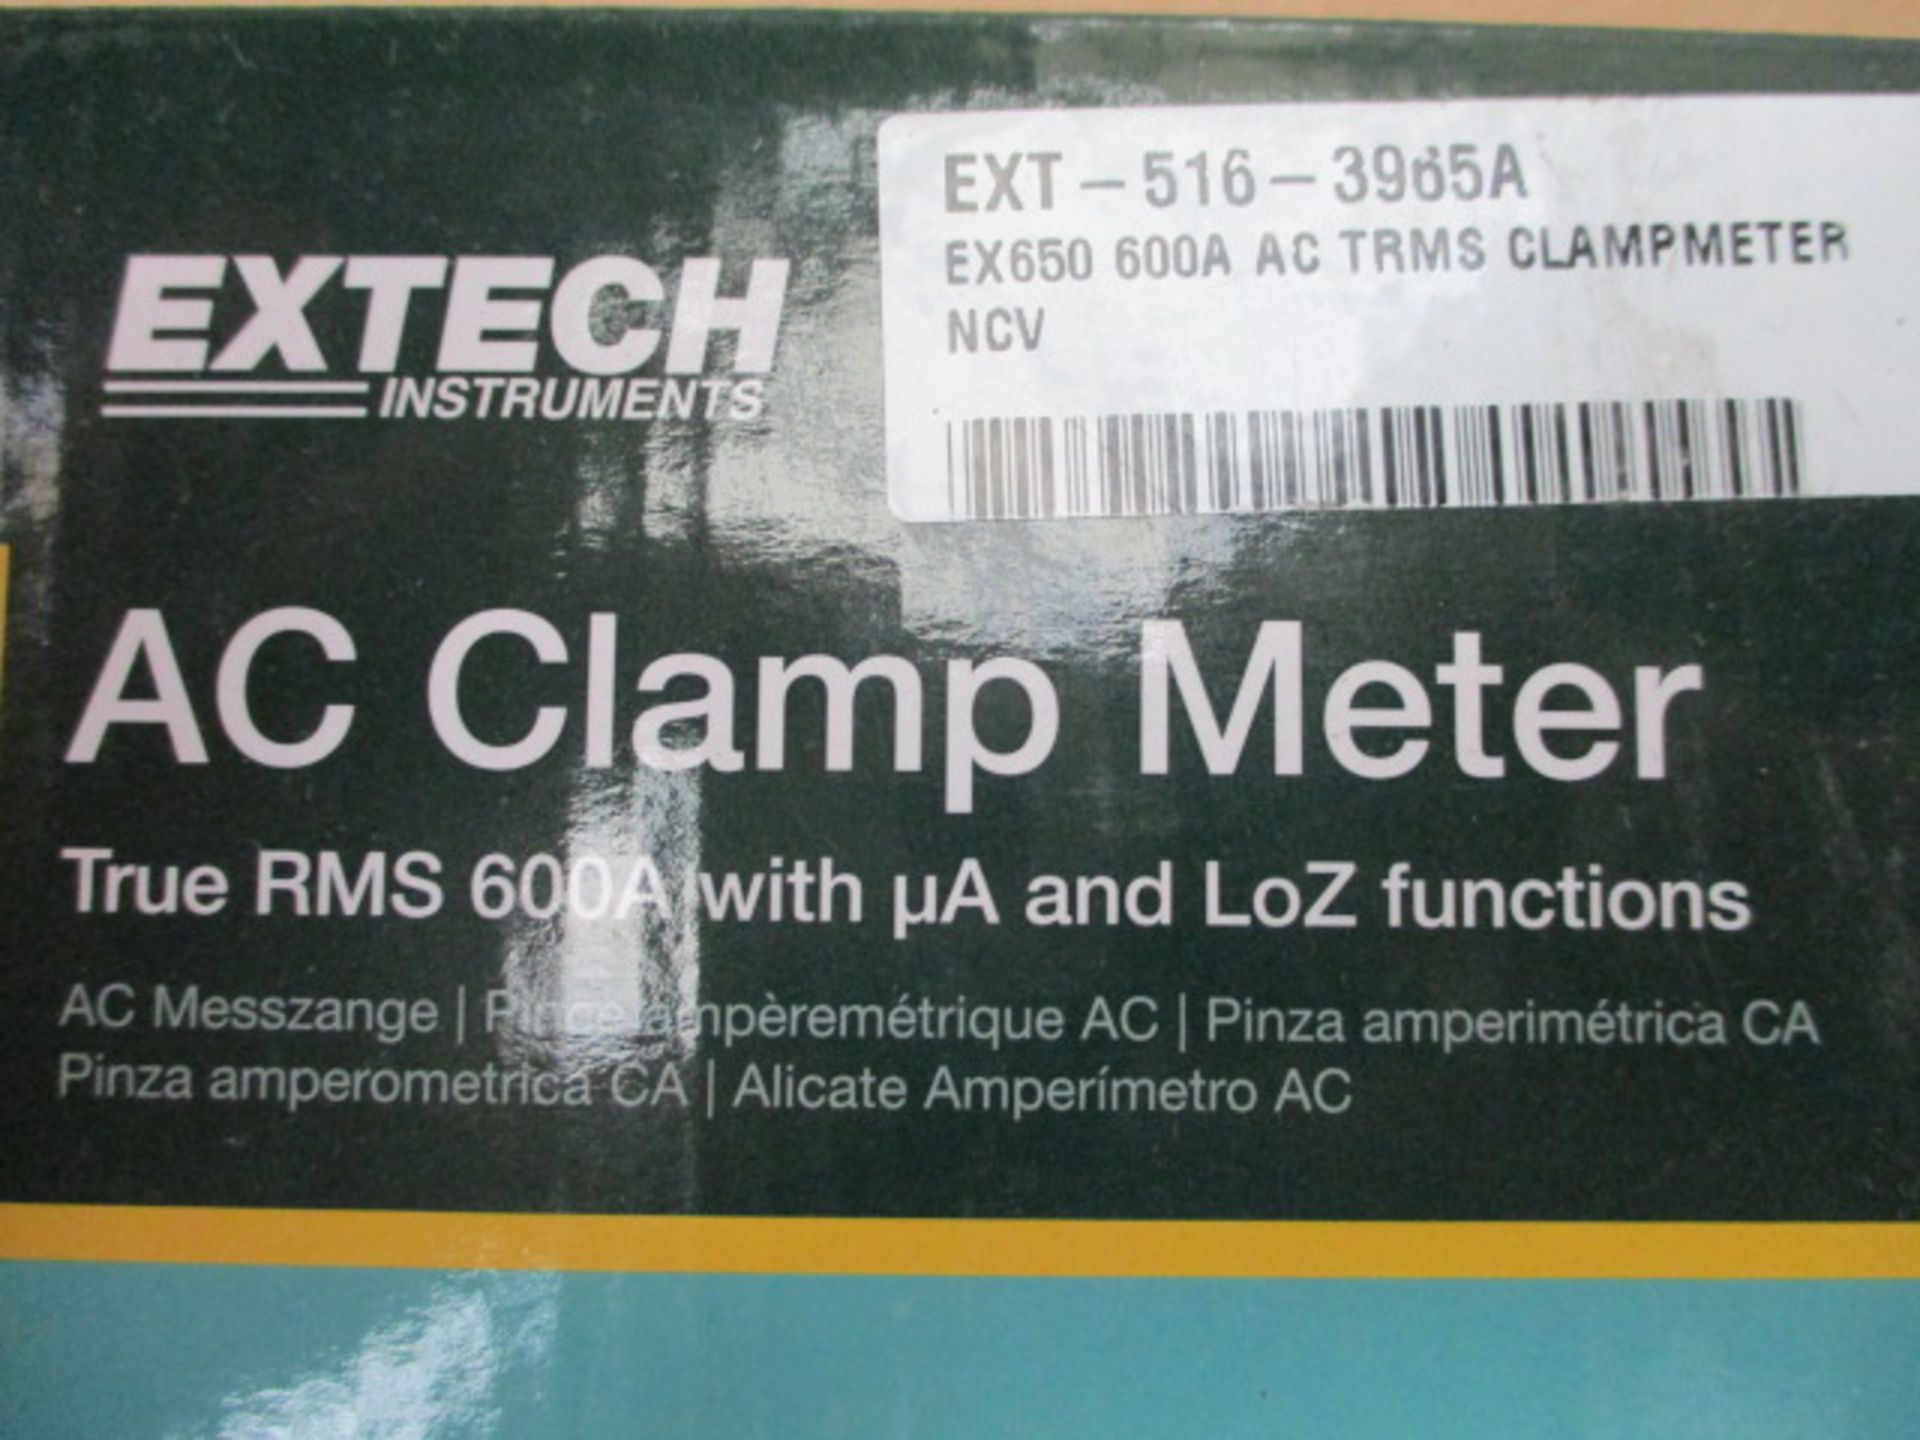 Clamp meter - Image 3 of 4